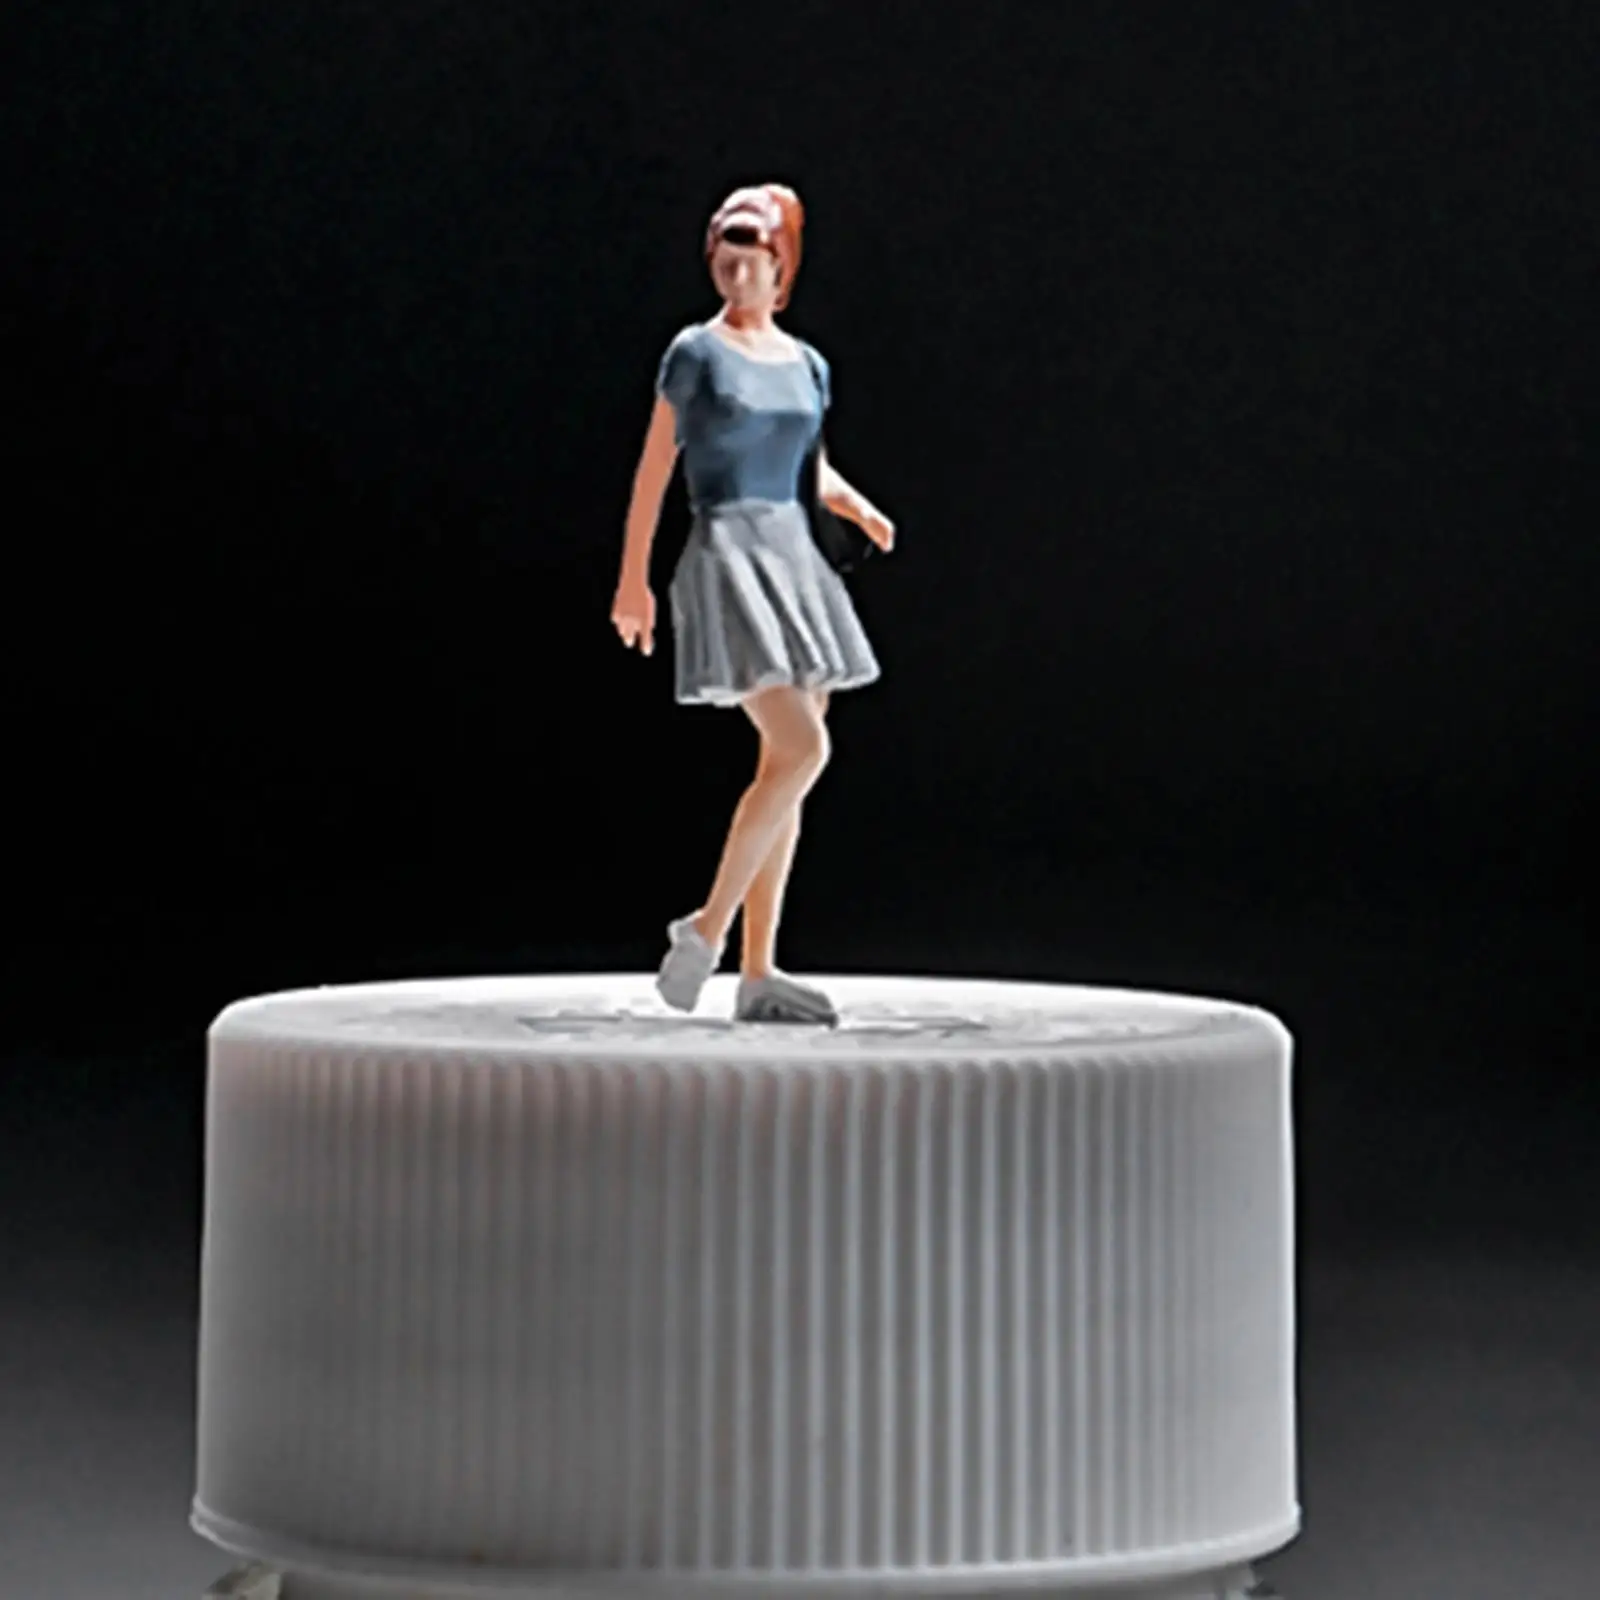 1/64 Miniature Figure Blue Skirt Girl Realistic Mini Handpainted Scene Layout for Dollhouse Accessories Railway Desktop Ornament